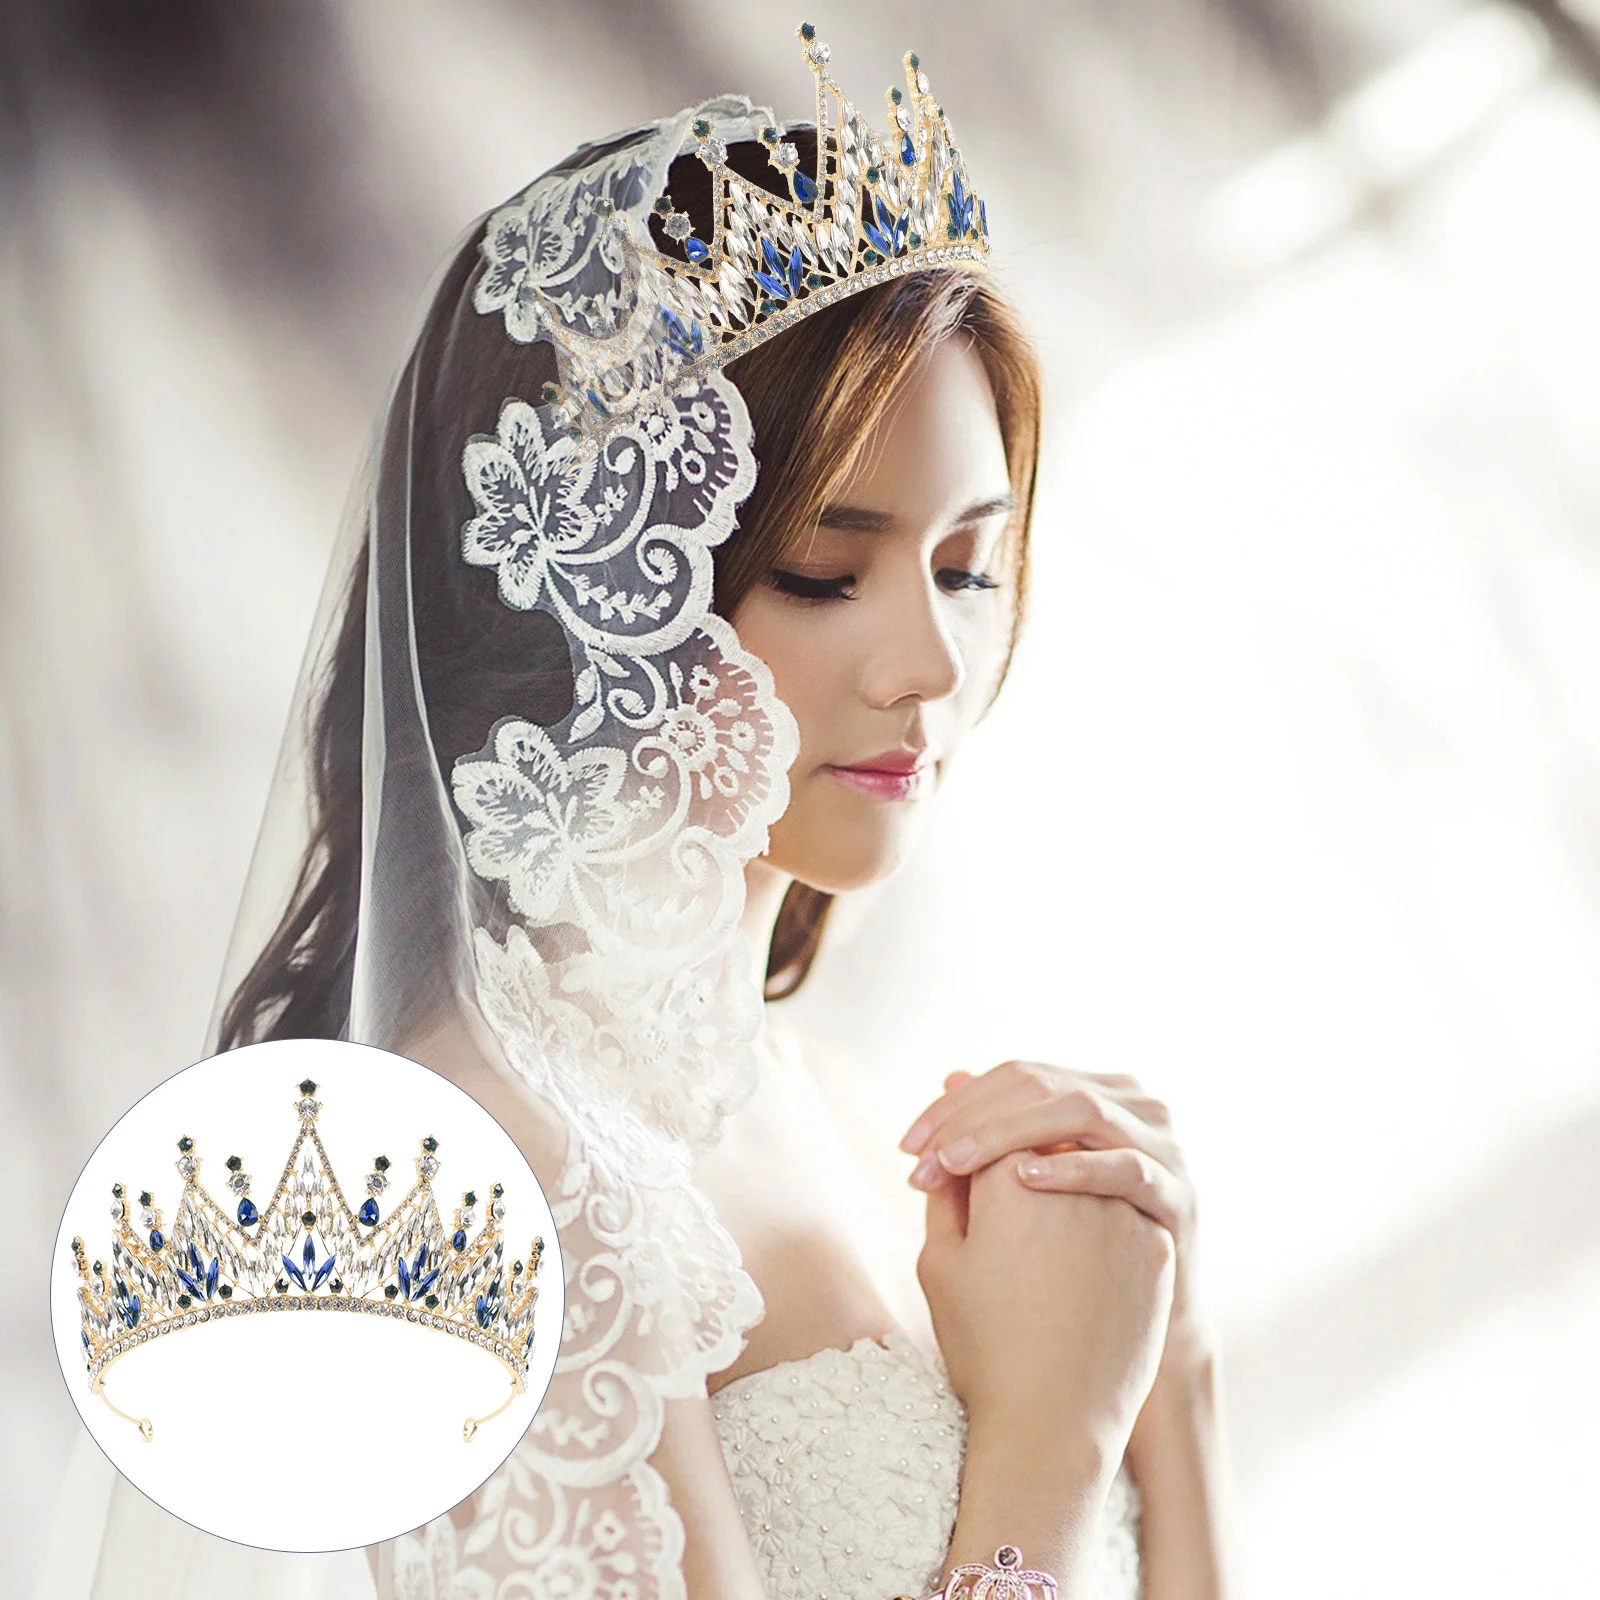 

Bridal Crown Hair Jewelry Accessories Delicate Crowns Women Tiara Wedding Bride Vintage Rhinestone Headdress